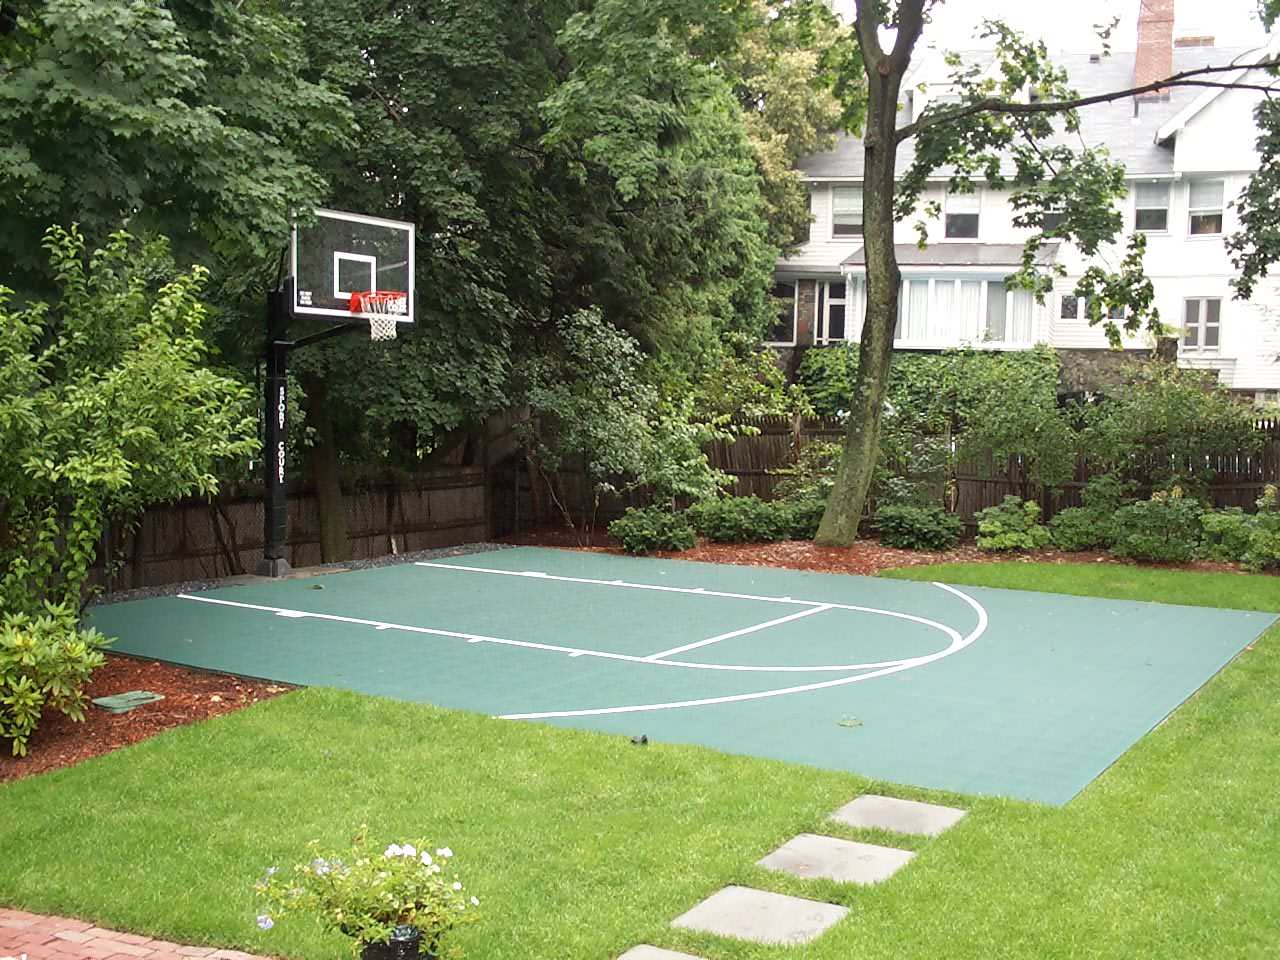 Outdoor Basketball Court - Photos & Ideas | Houzz